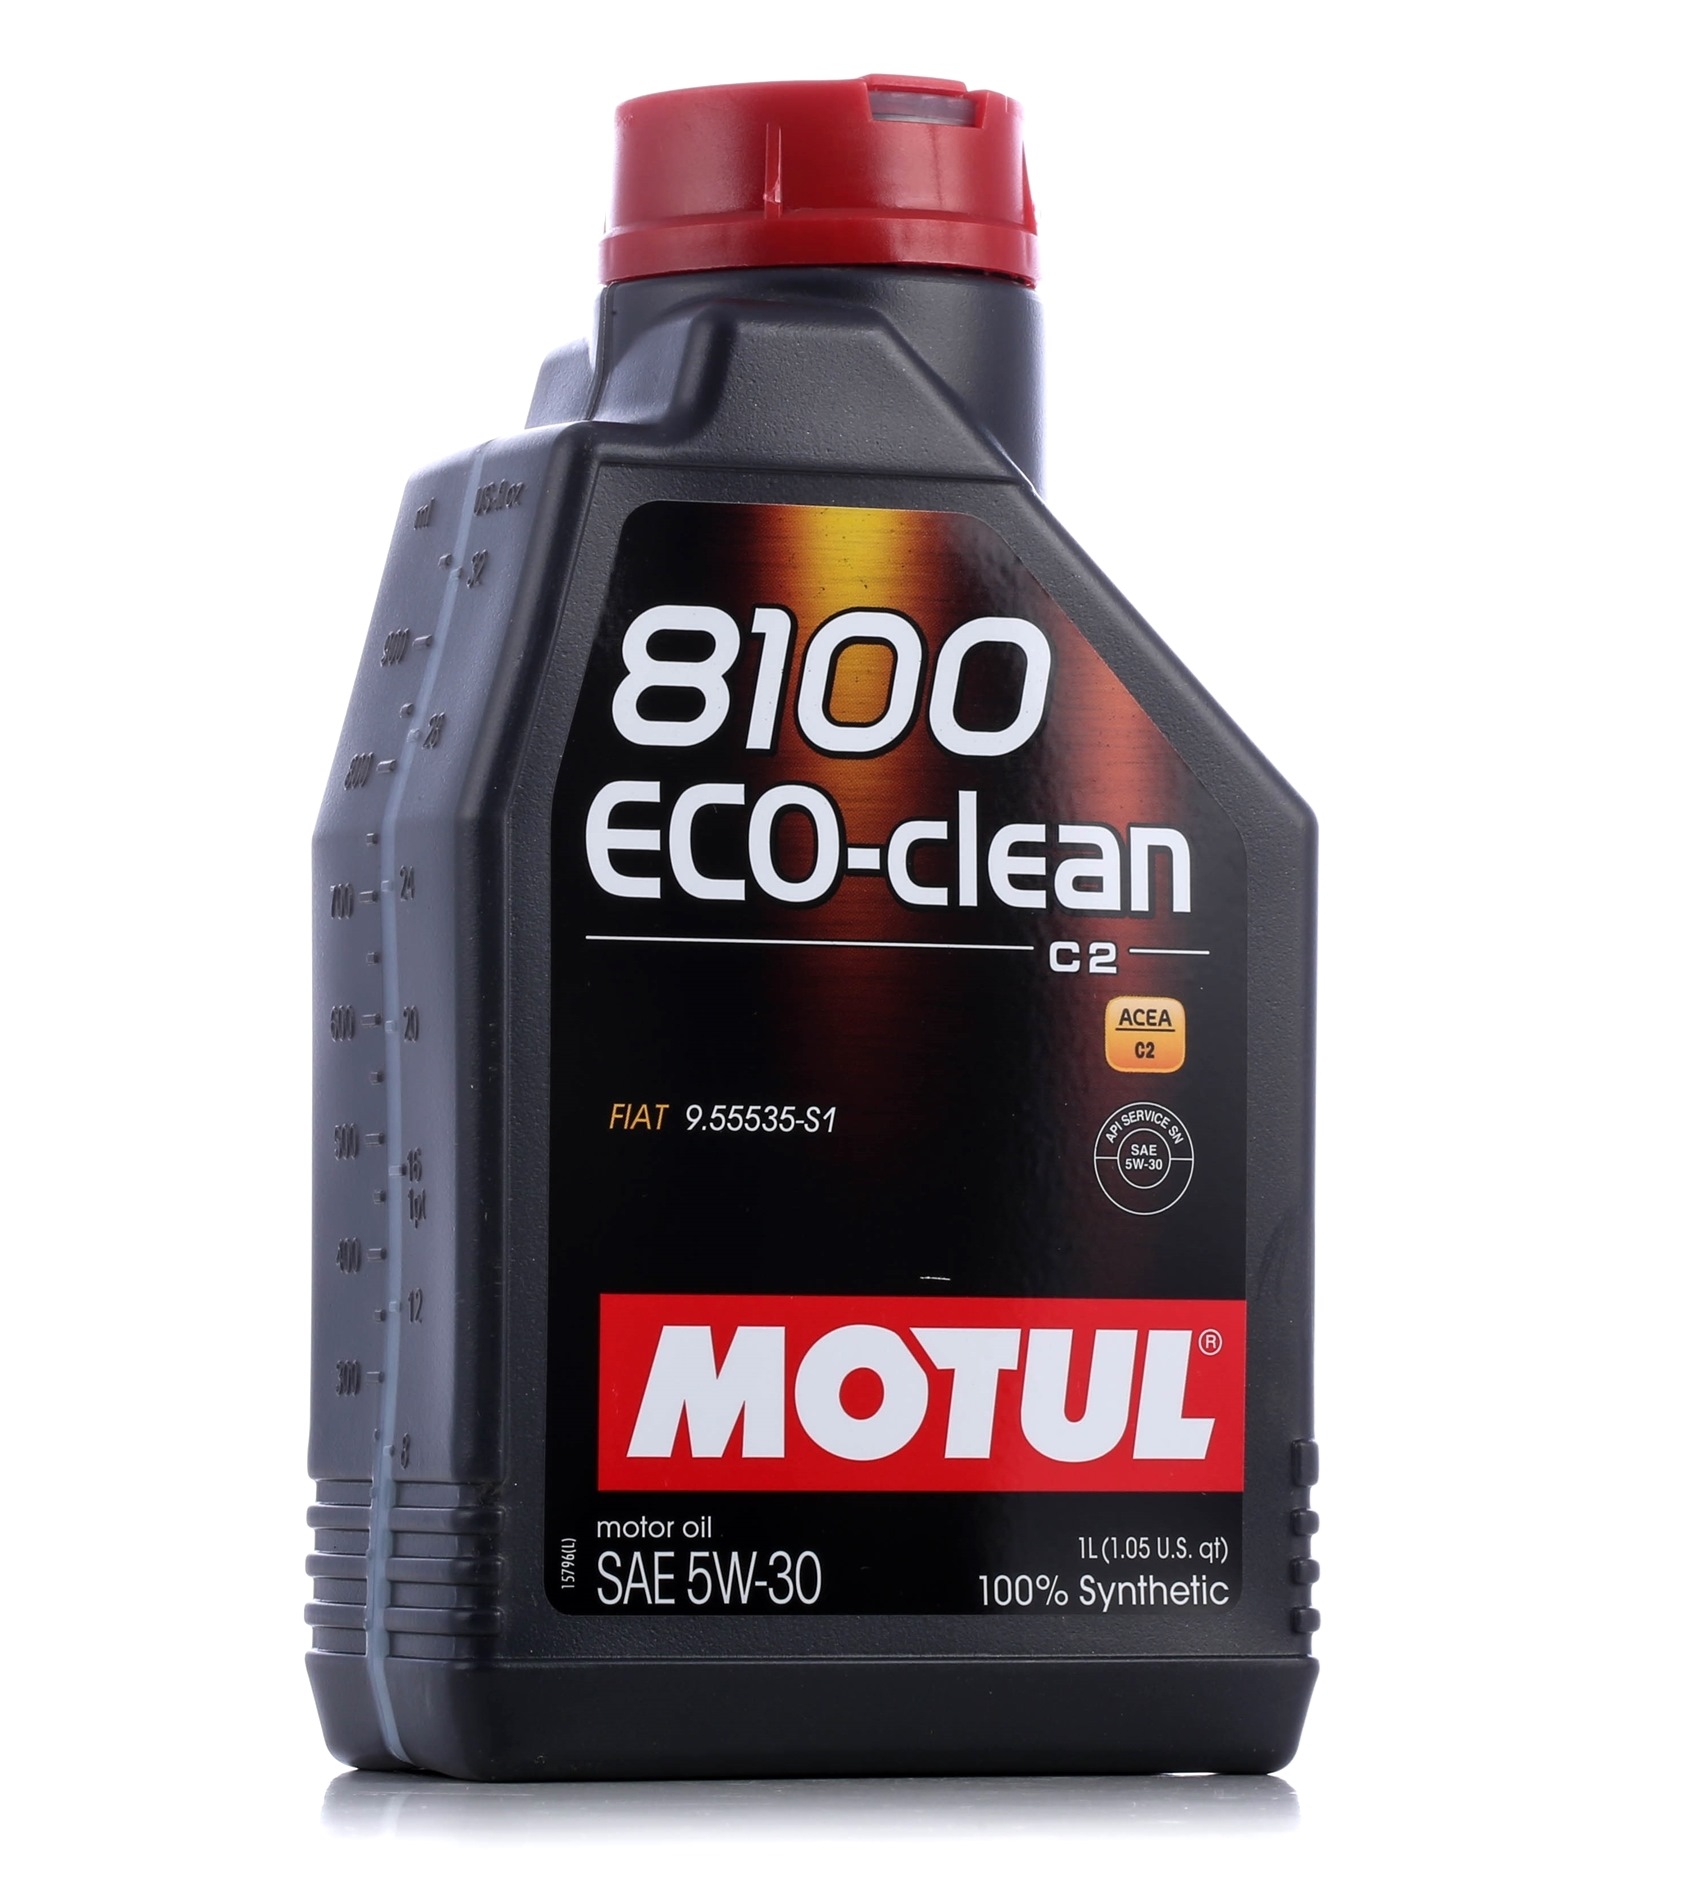 MOTUL 8100, ECO-CLEAN 101542 Engine oil 5W-30, 1l, Synthetic Oil